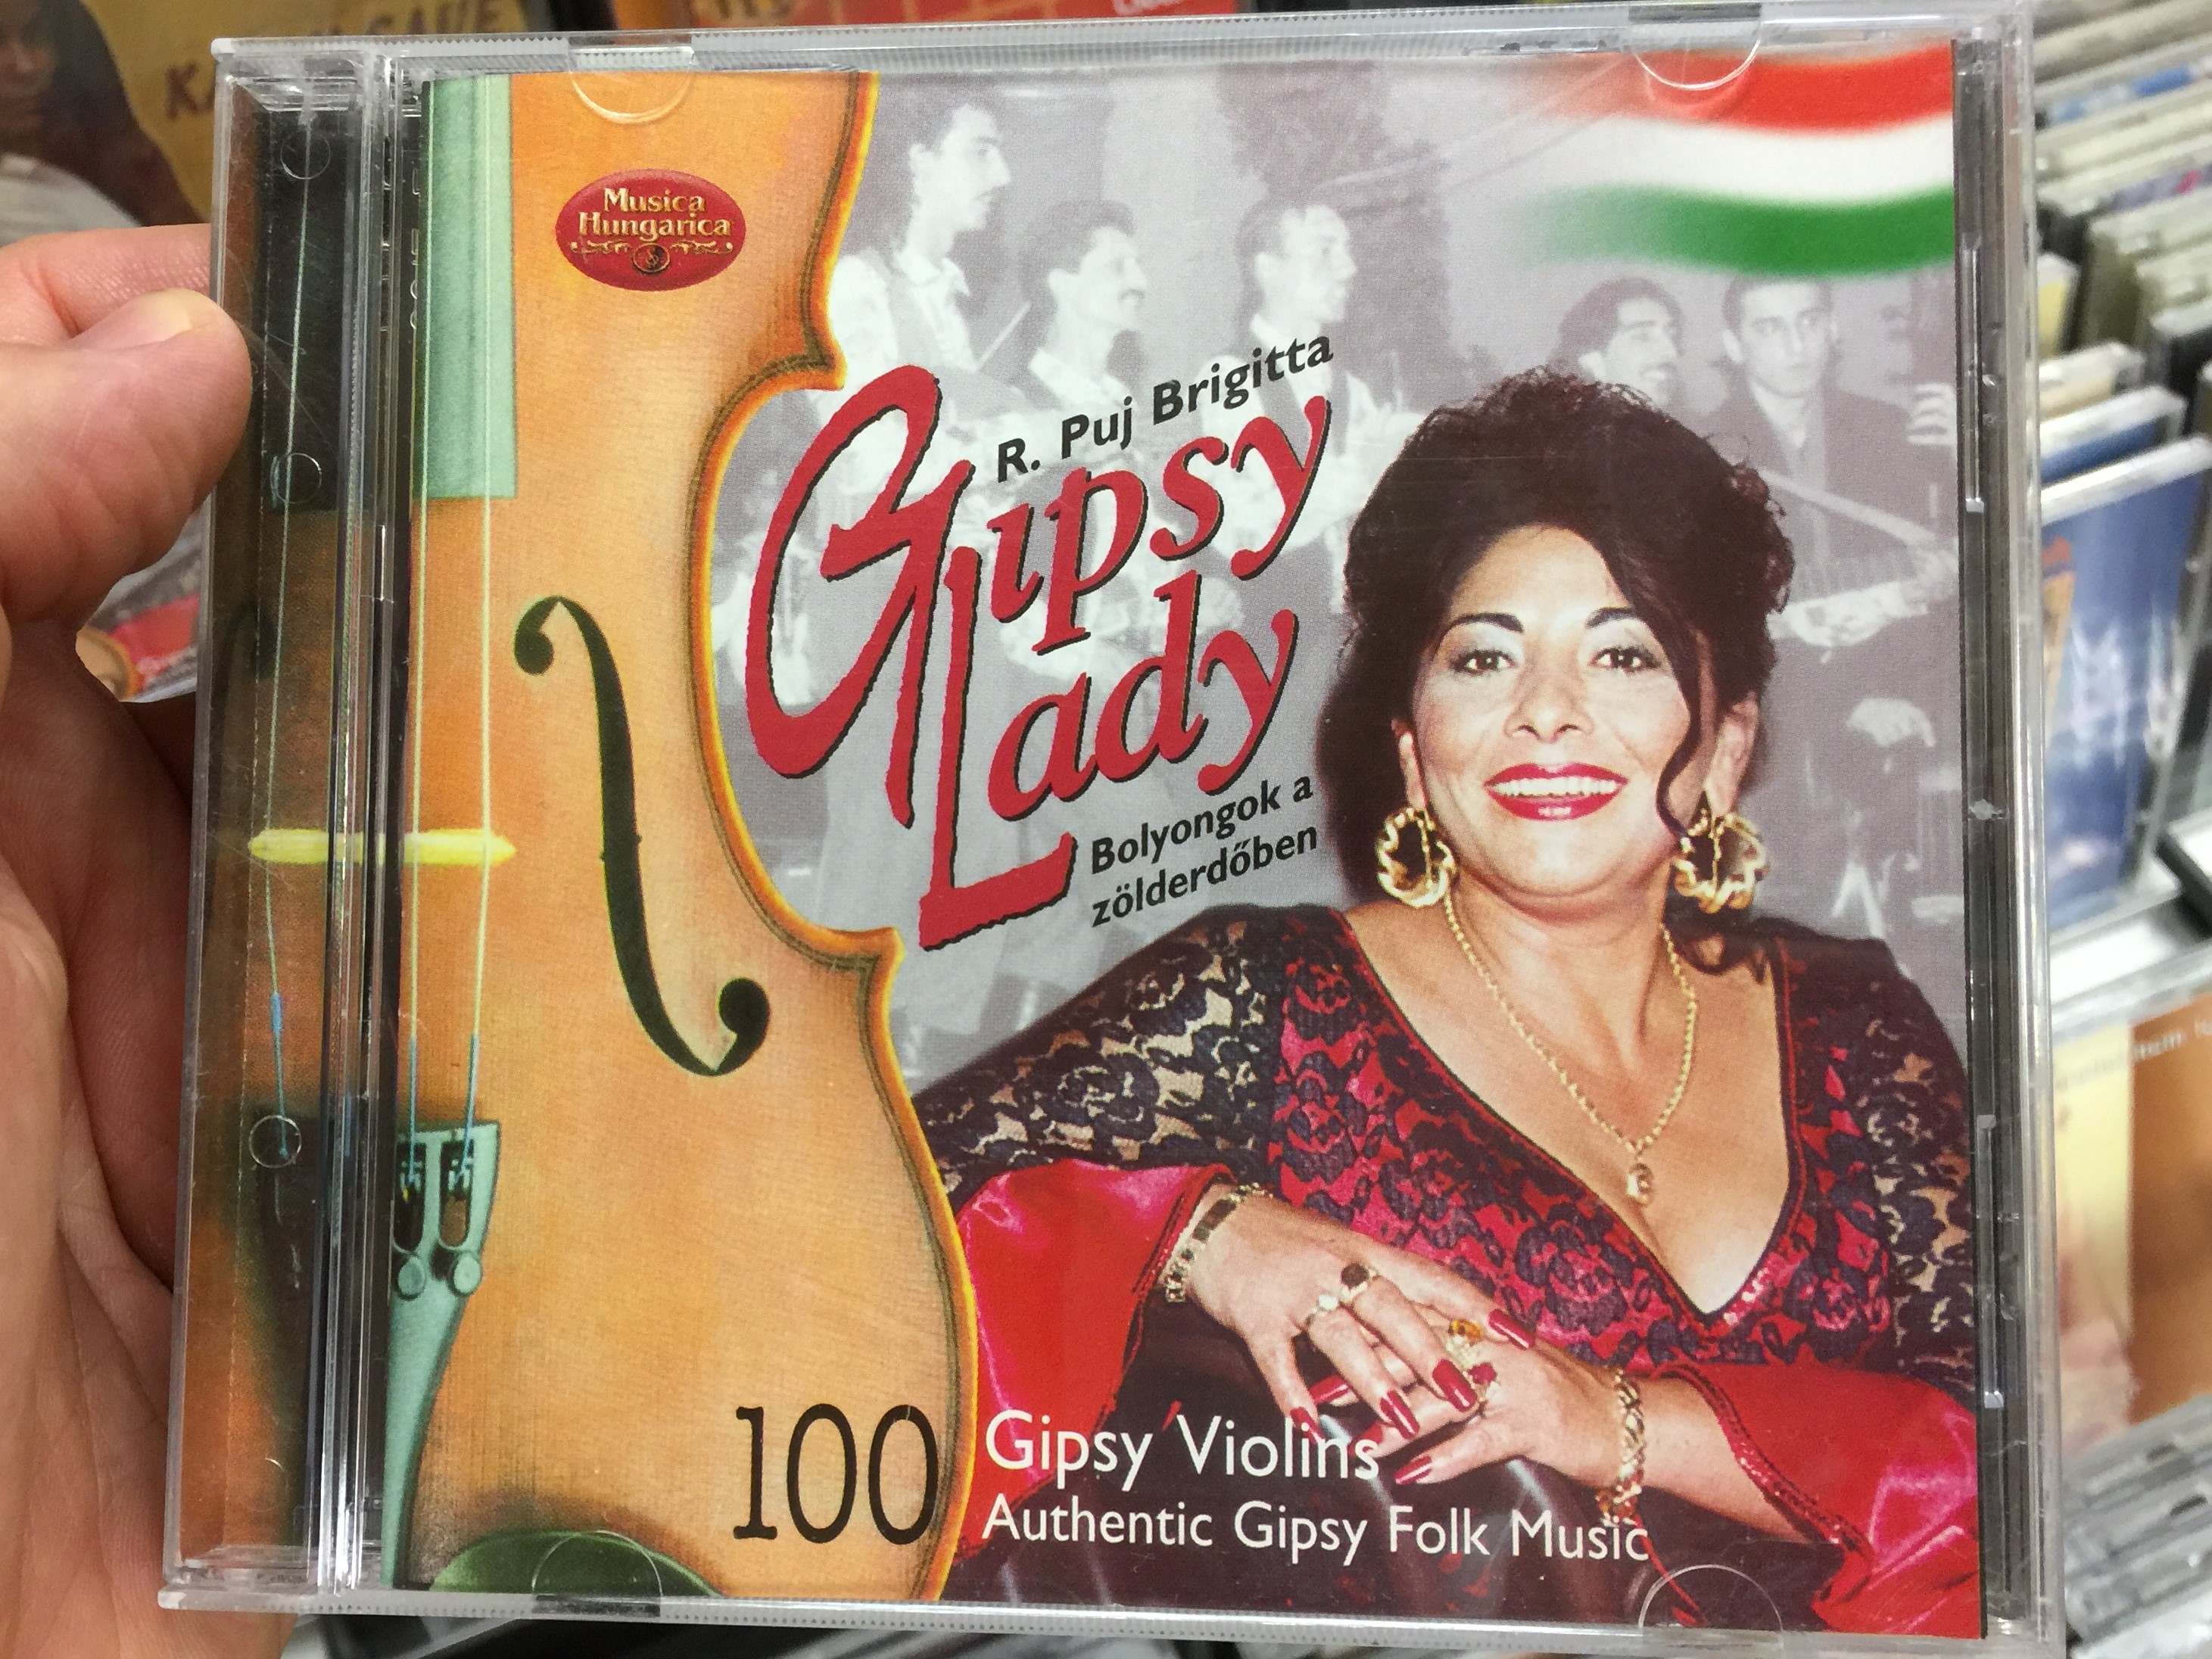 r.-puj-brigitta-gipsy-lady-bolyongok-a-zolderdoben-100-gipsy-violins-authentic-gispy-folk-music-musica-hungarica-audio-cd-2004-stereo-mha-442-1-.jpg